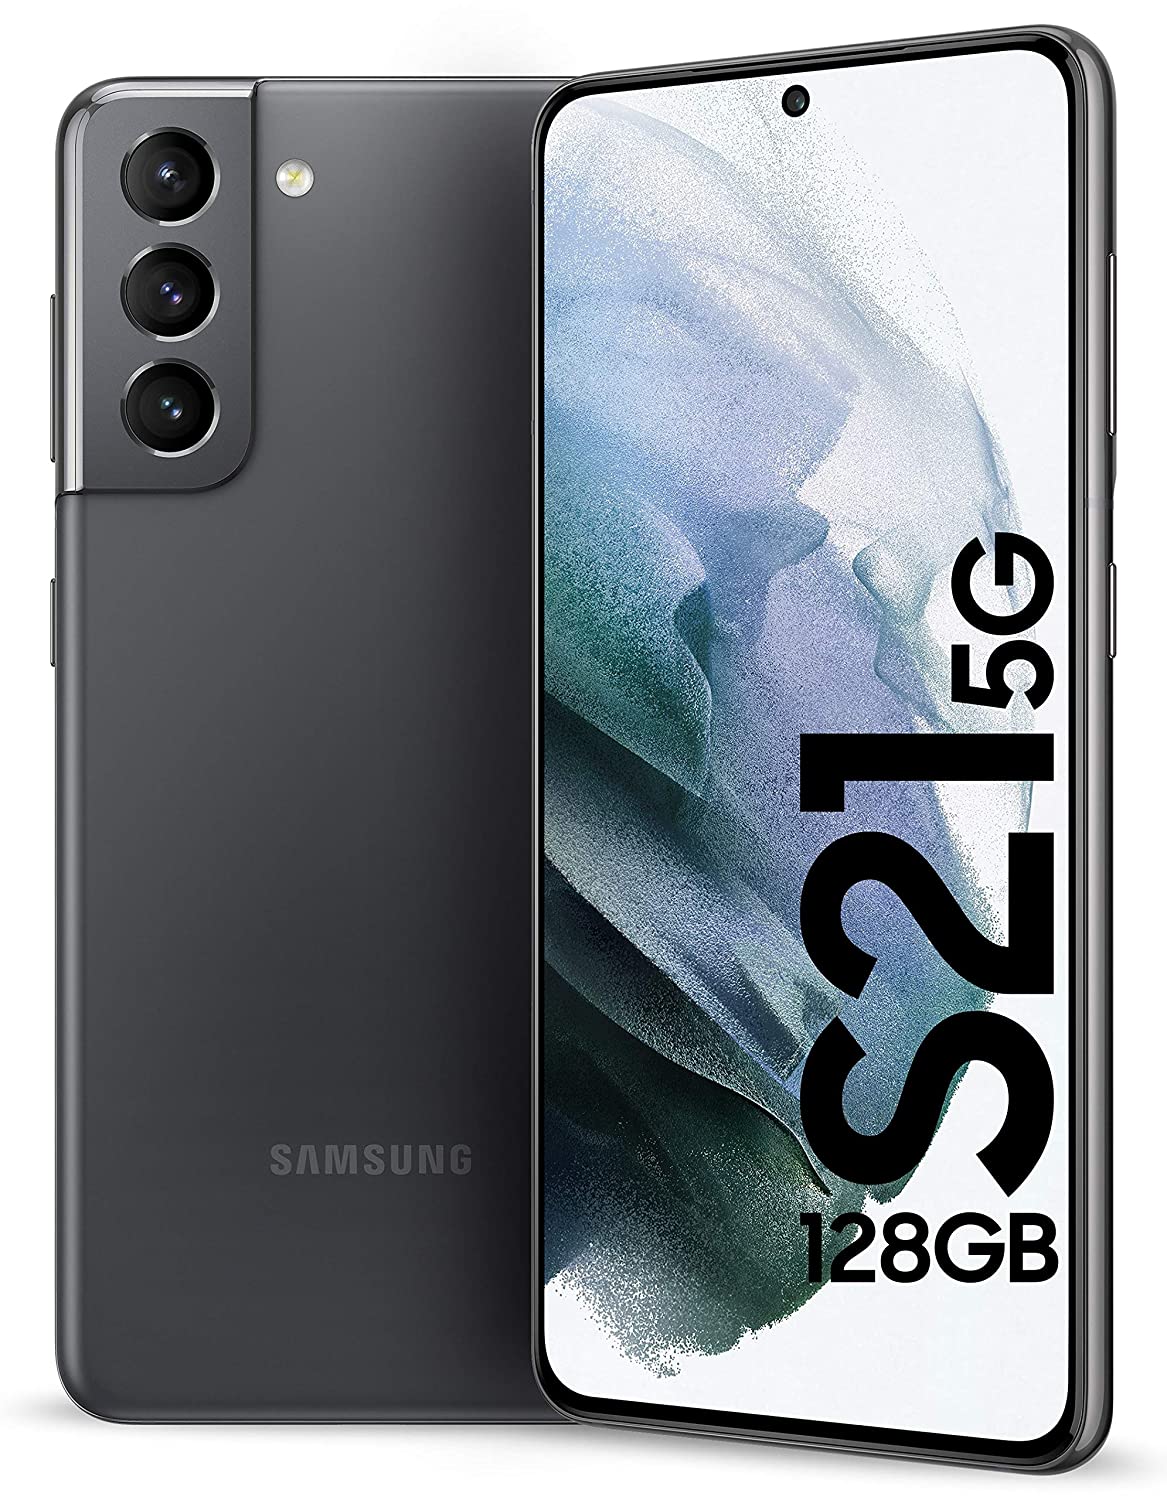 Samsung Android Smartphone S21 (8GB RAM, 128GB Storage/ROM) Grey